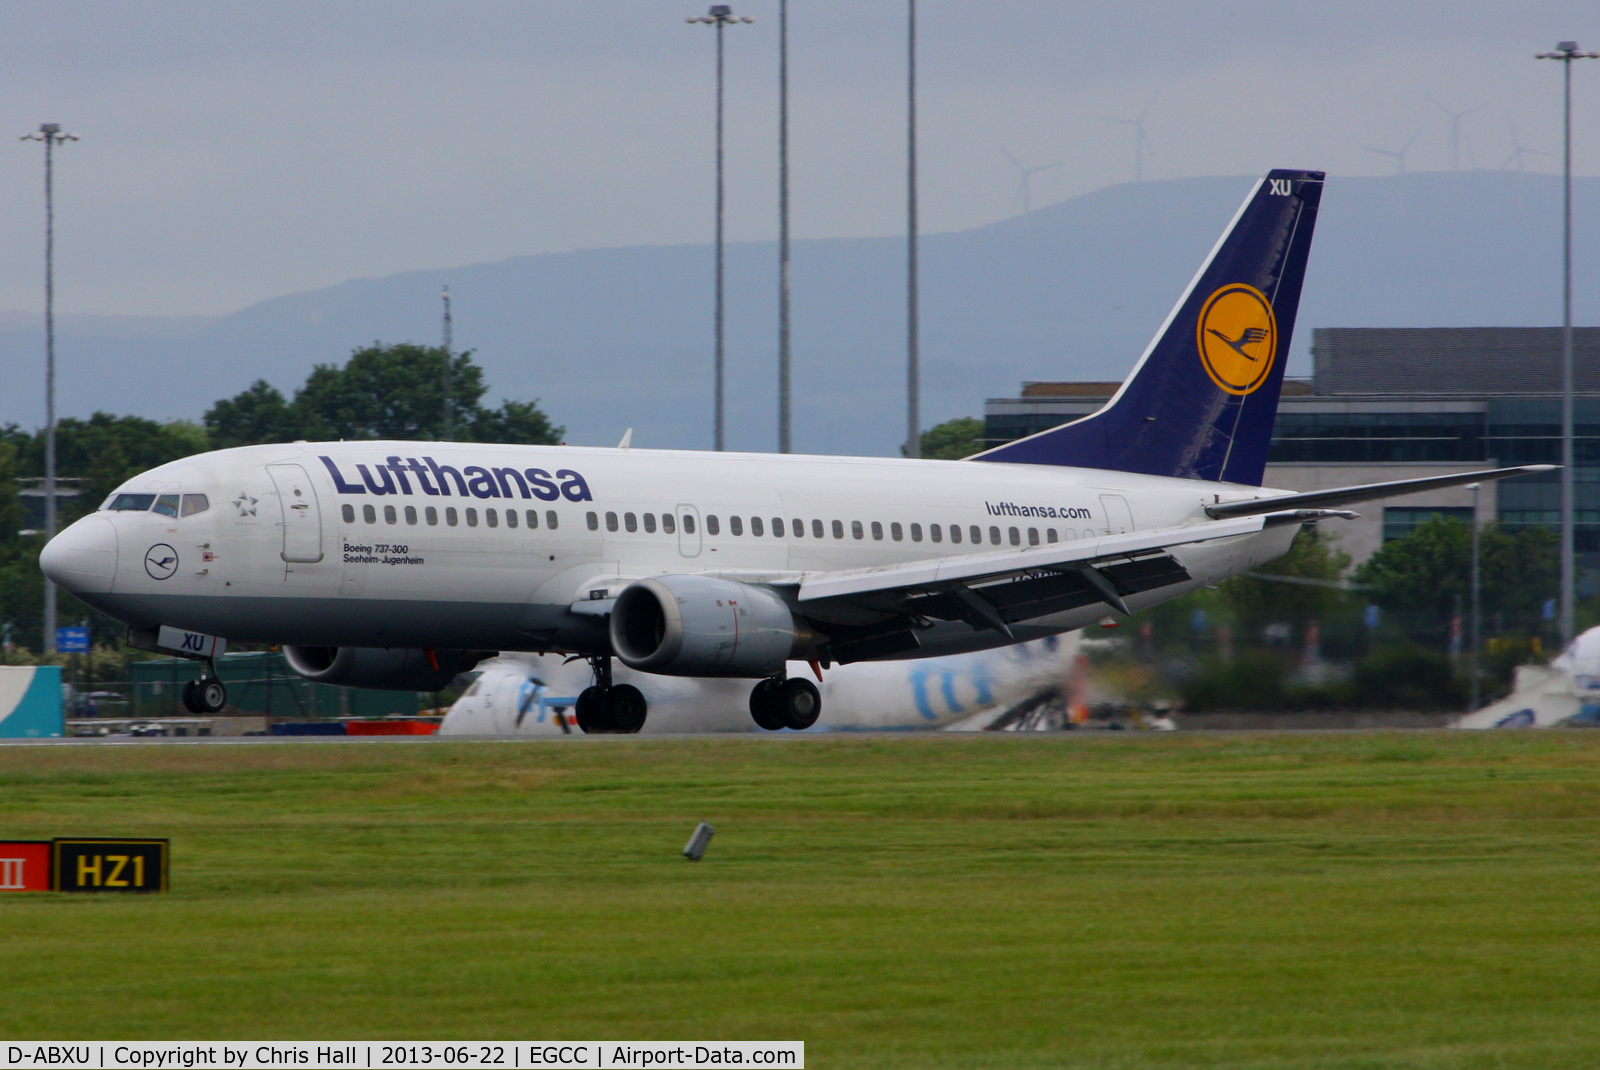 D-ABXU, 1989 Boeing 737-330 C/N 24282, Lufthansa